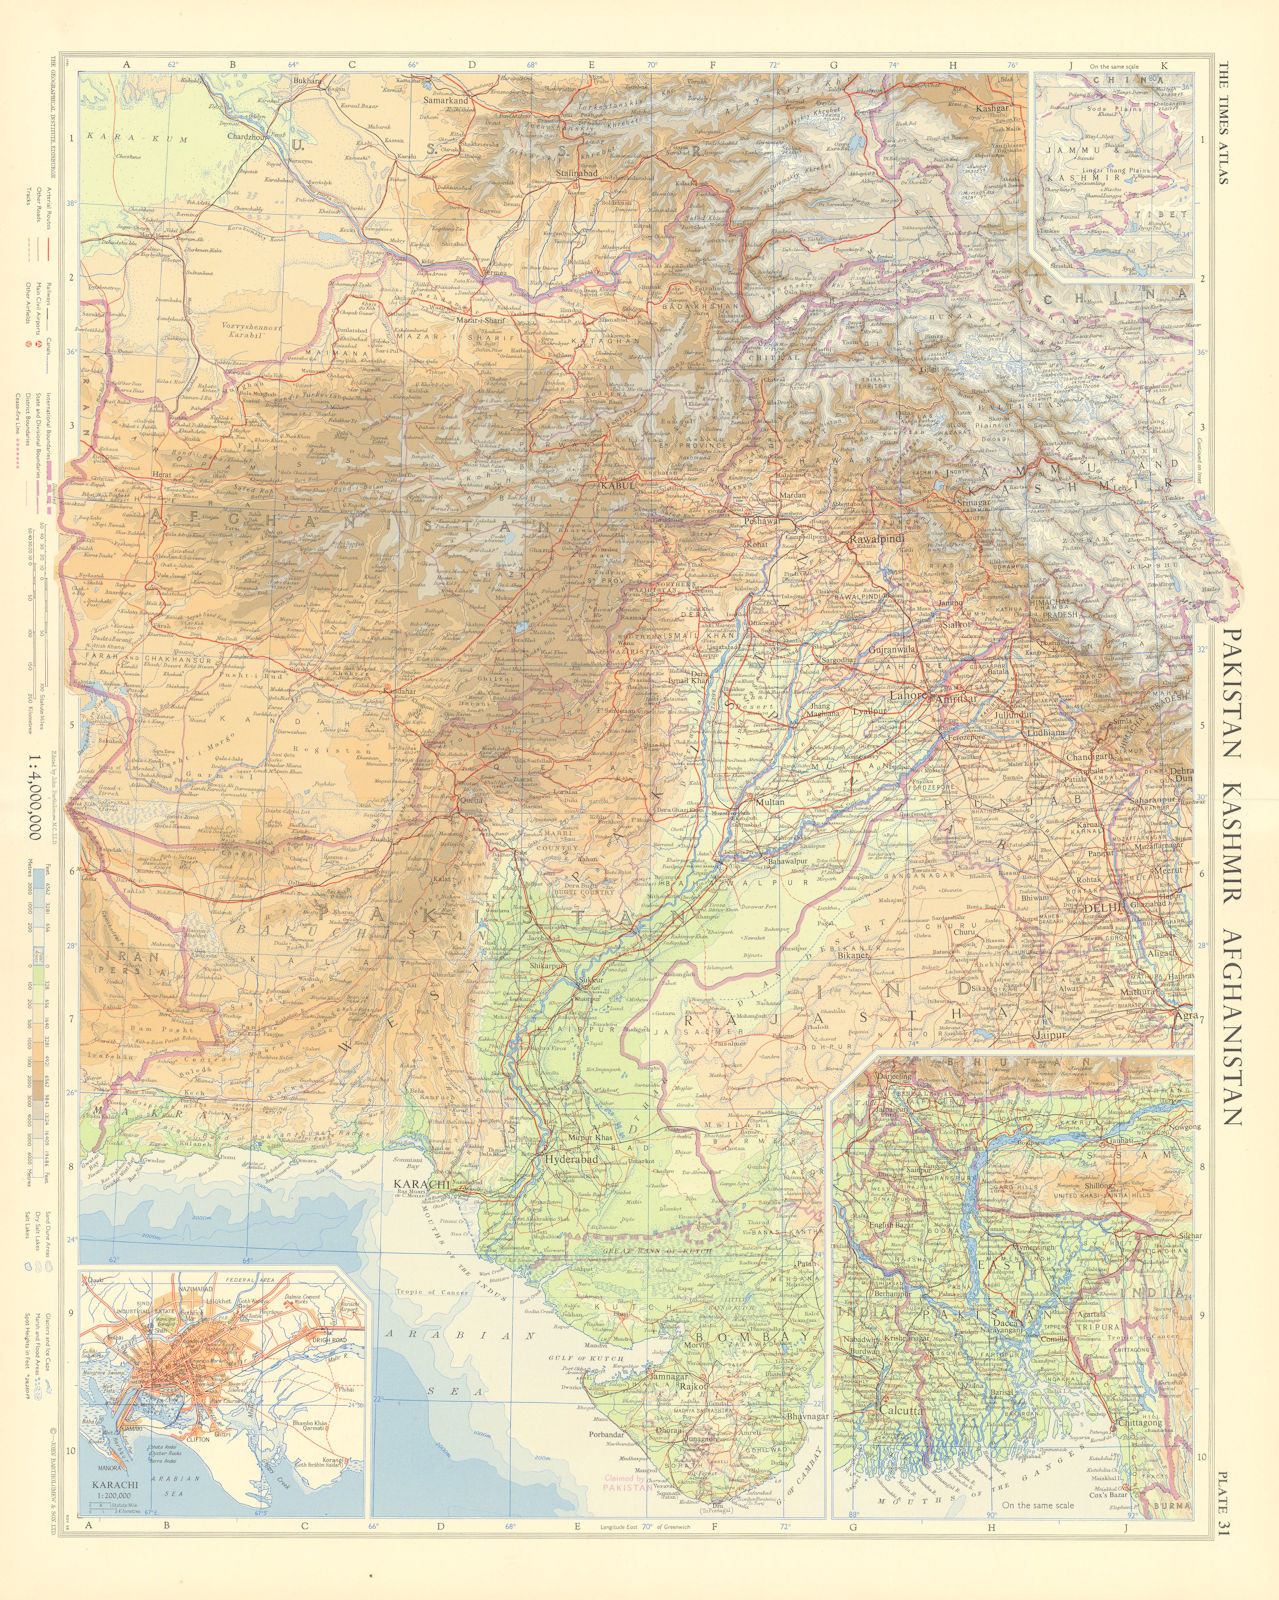 Pakistan & Afghanistan. Karachi. Punjab Himalaya. TIMES 1959 old vintage map